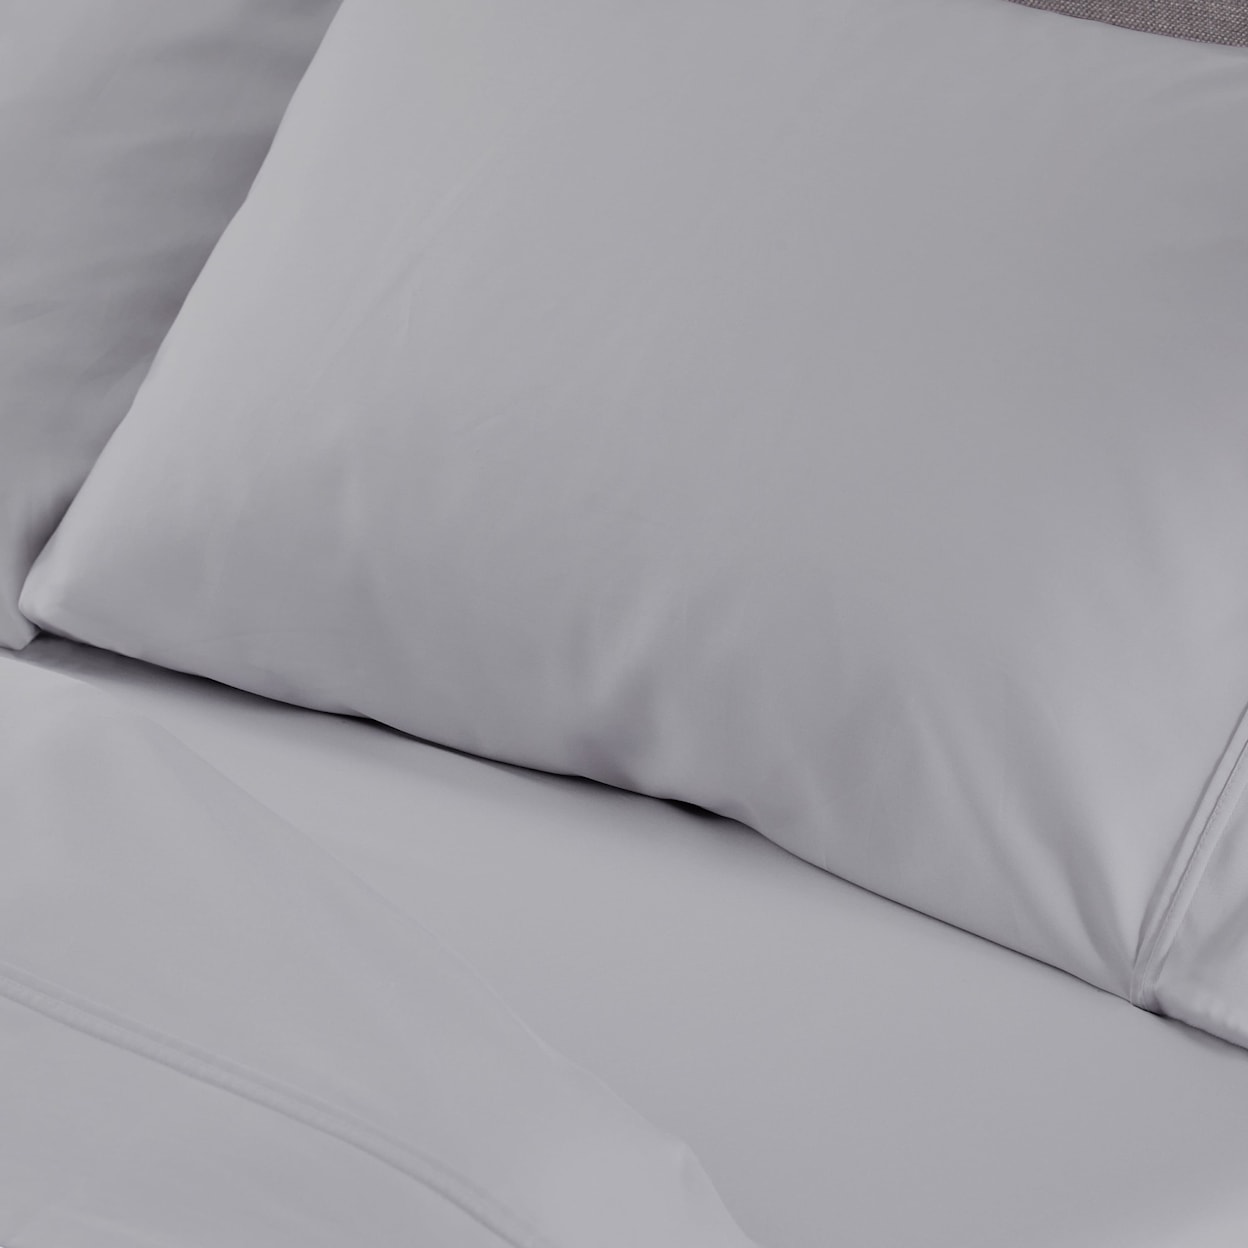 Bedgear Hyper Cotton Sheets Sheet Set,Grey, Twin XL